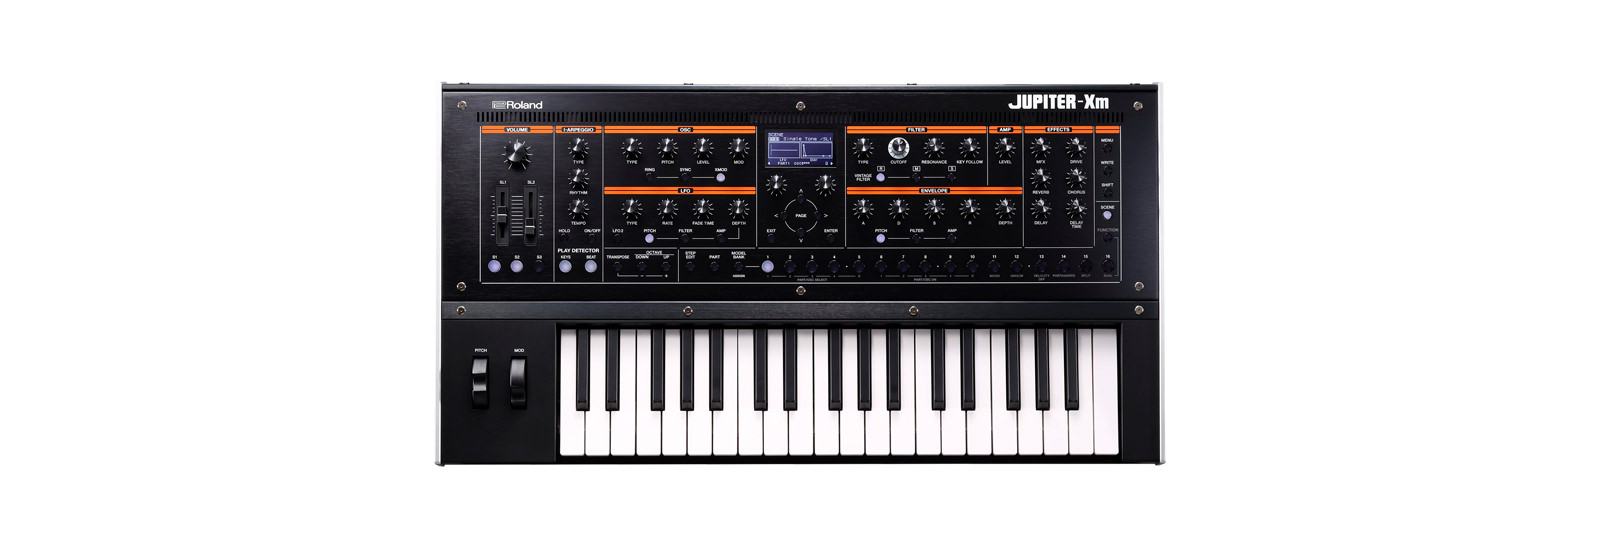 JP-8 SFX - Free Jupiter 8 Sound Effects Samples